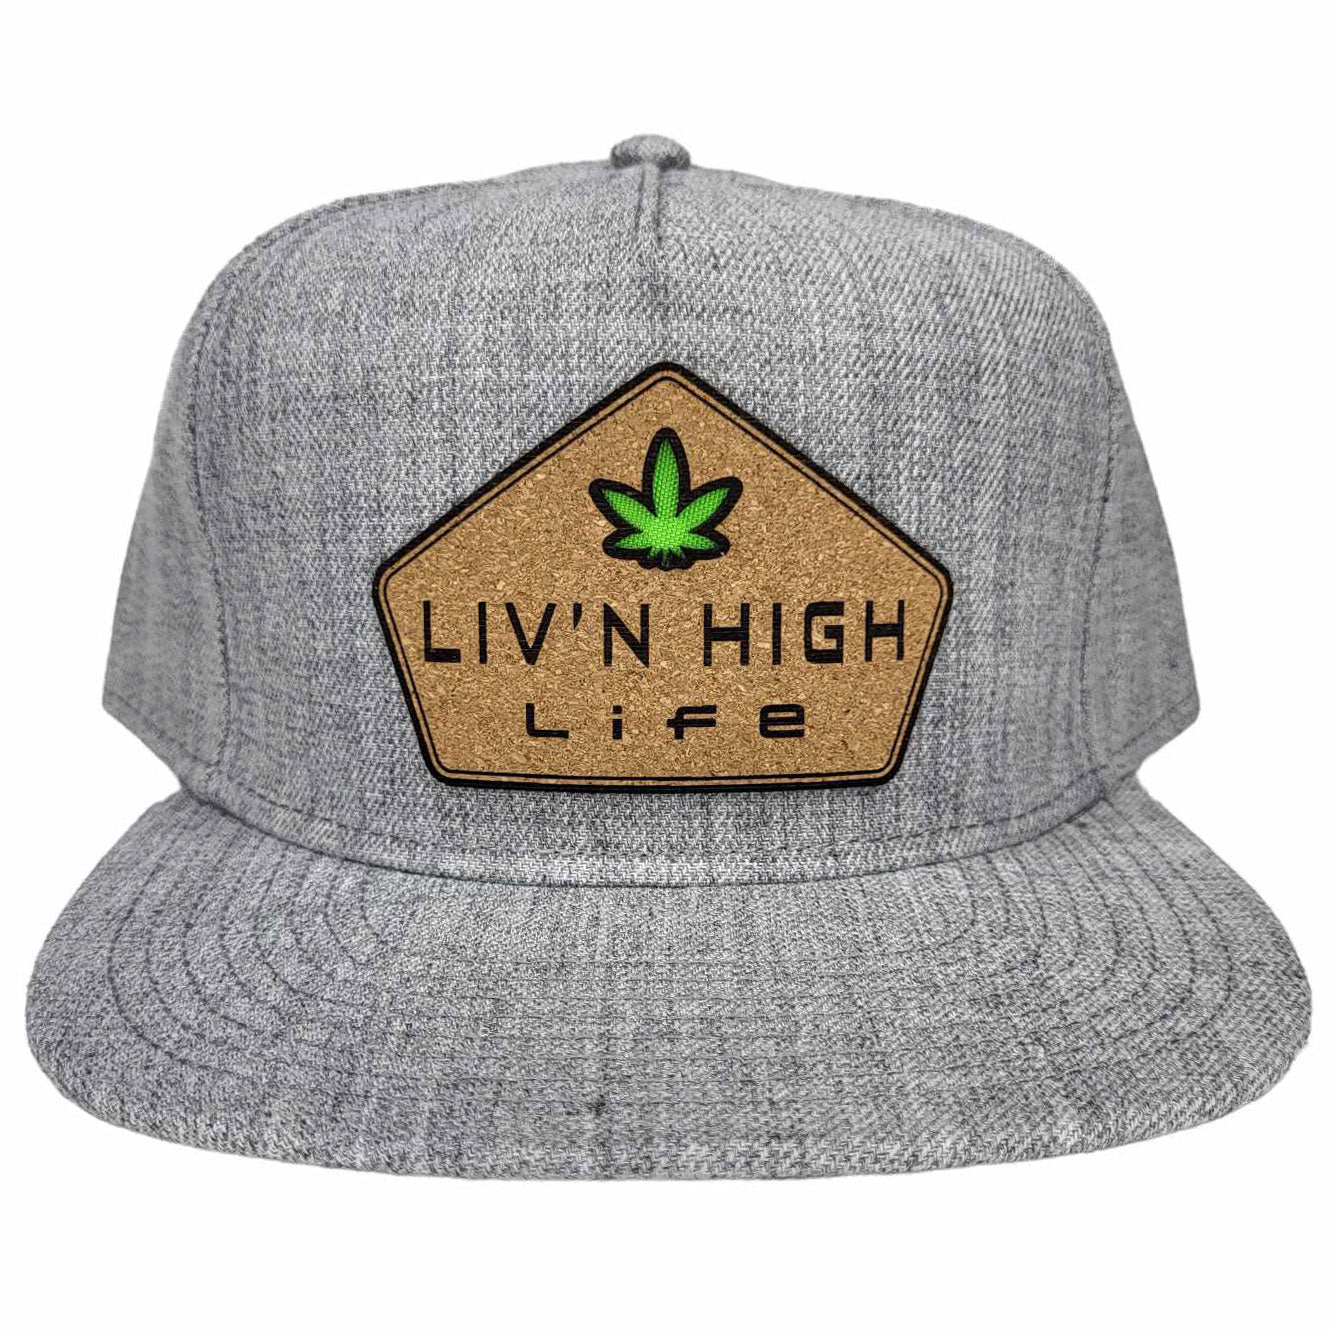 Liv'n High Life Cork Patch Hat